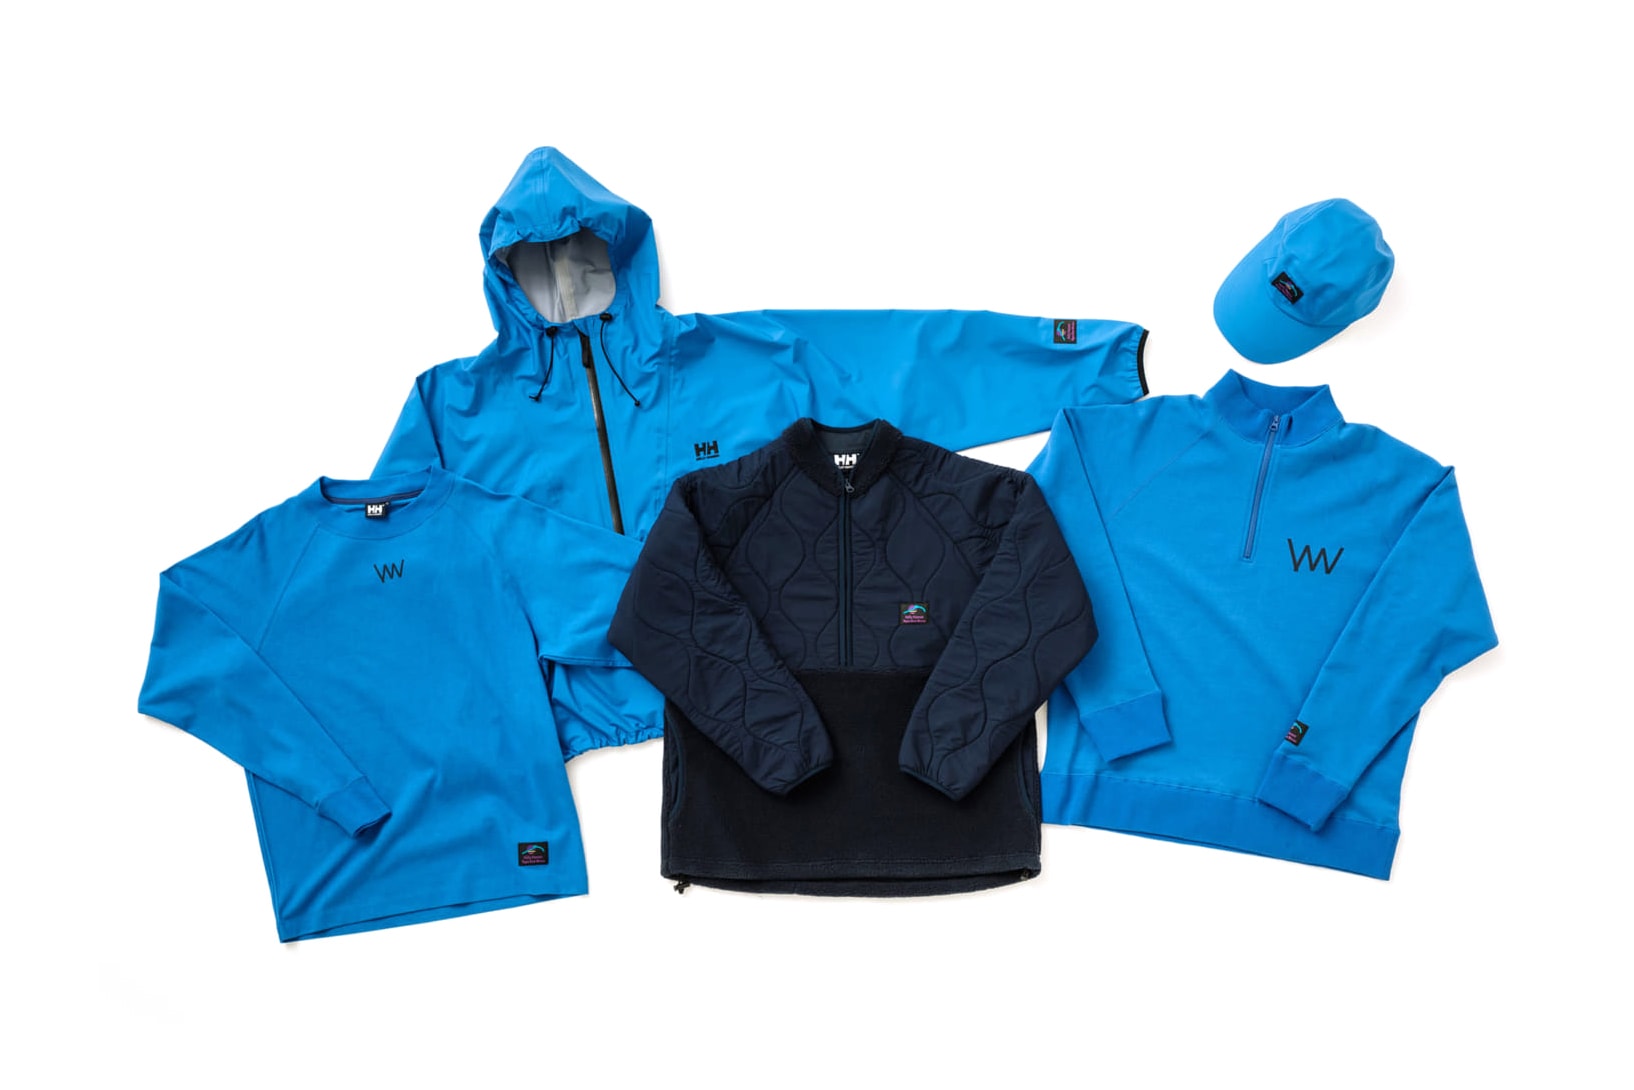 Helly Hansen Yogee New Waves Collaboration 2017 December 13 Release Date Info Blue Jacket Pullover Sweatshirt Crewneck Cap Hat